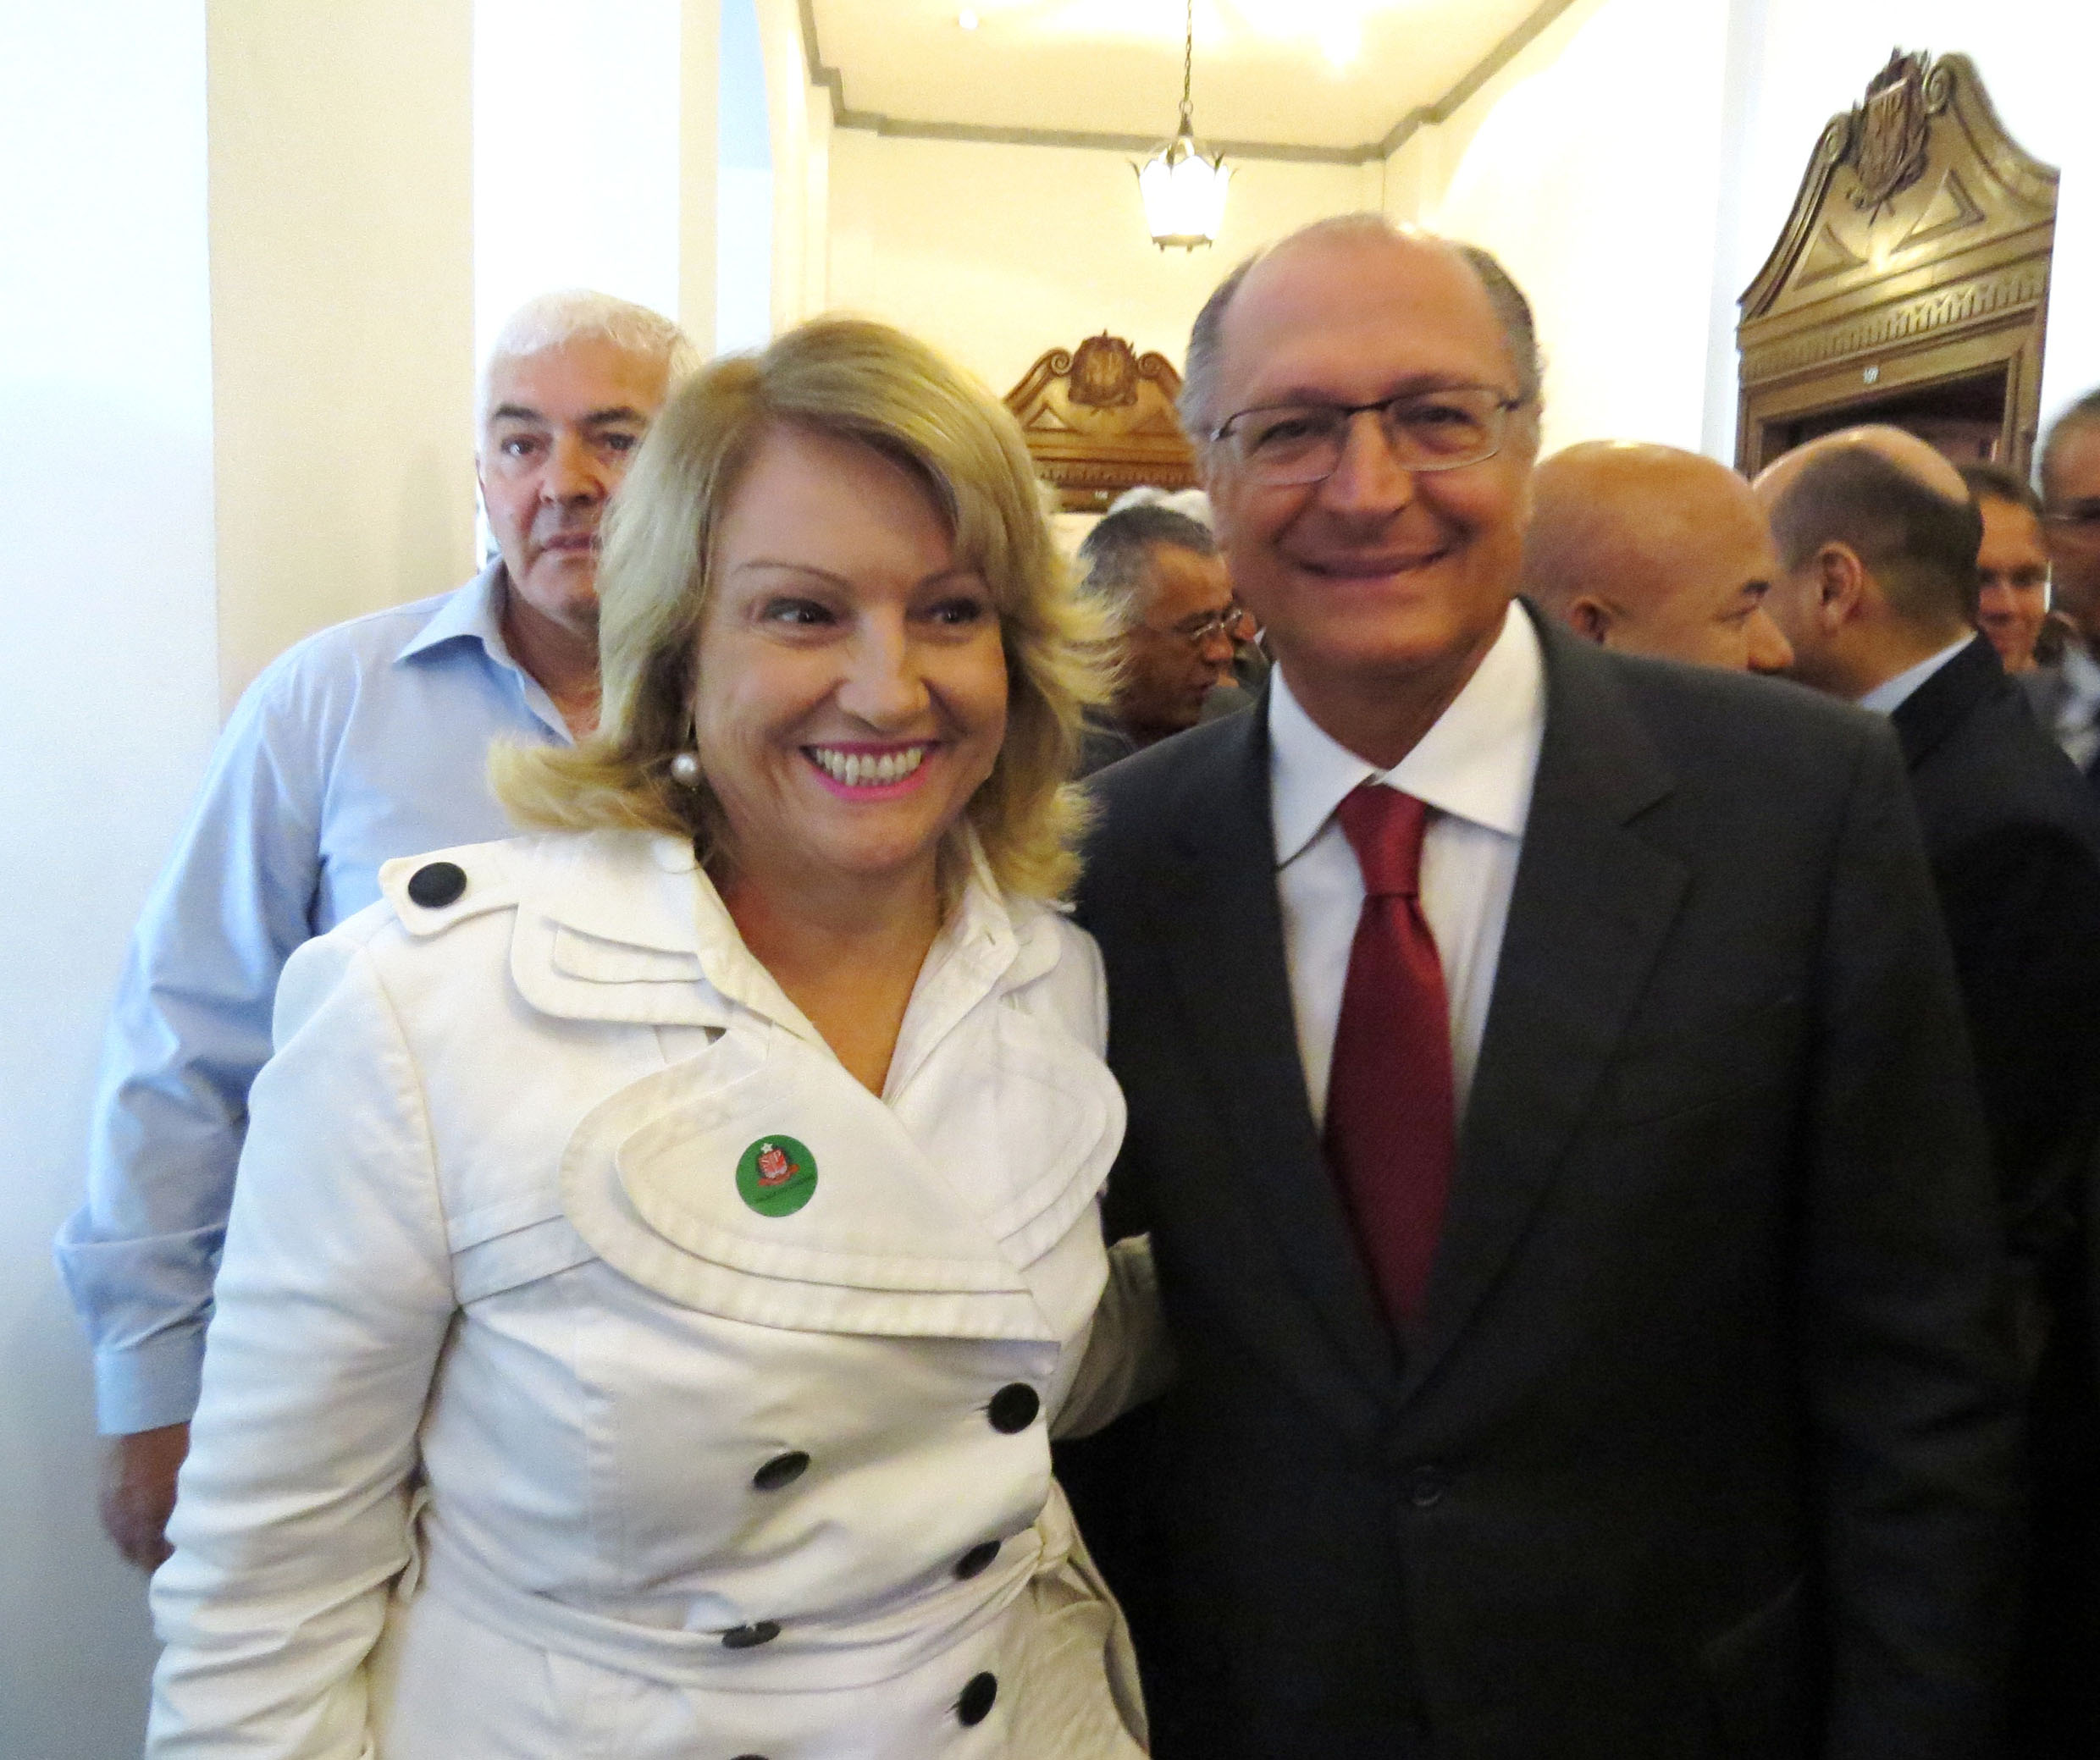 Maria Lcia Amary e Geraldo Alckmin<a style='float:right;color:#ccc' href='https://www3.al.sp.gov.br/repositorio/noticia/N-11-2013/fg132660.jpg' target=_blank><i class='bi bi-zoom-in'></i> Clique para ver a imagem </a>